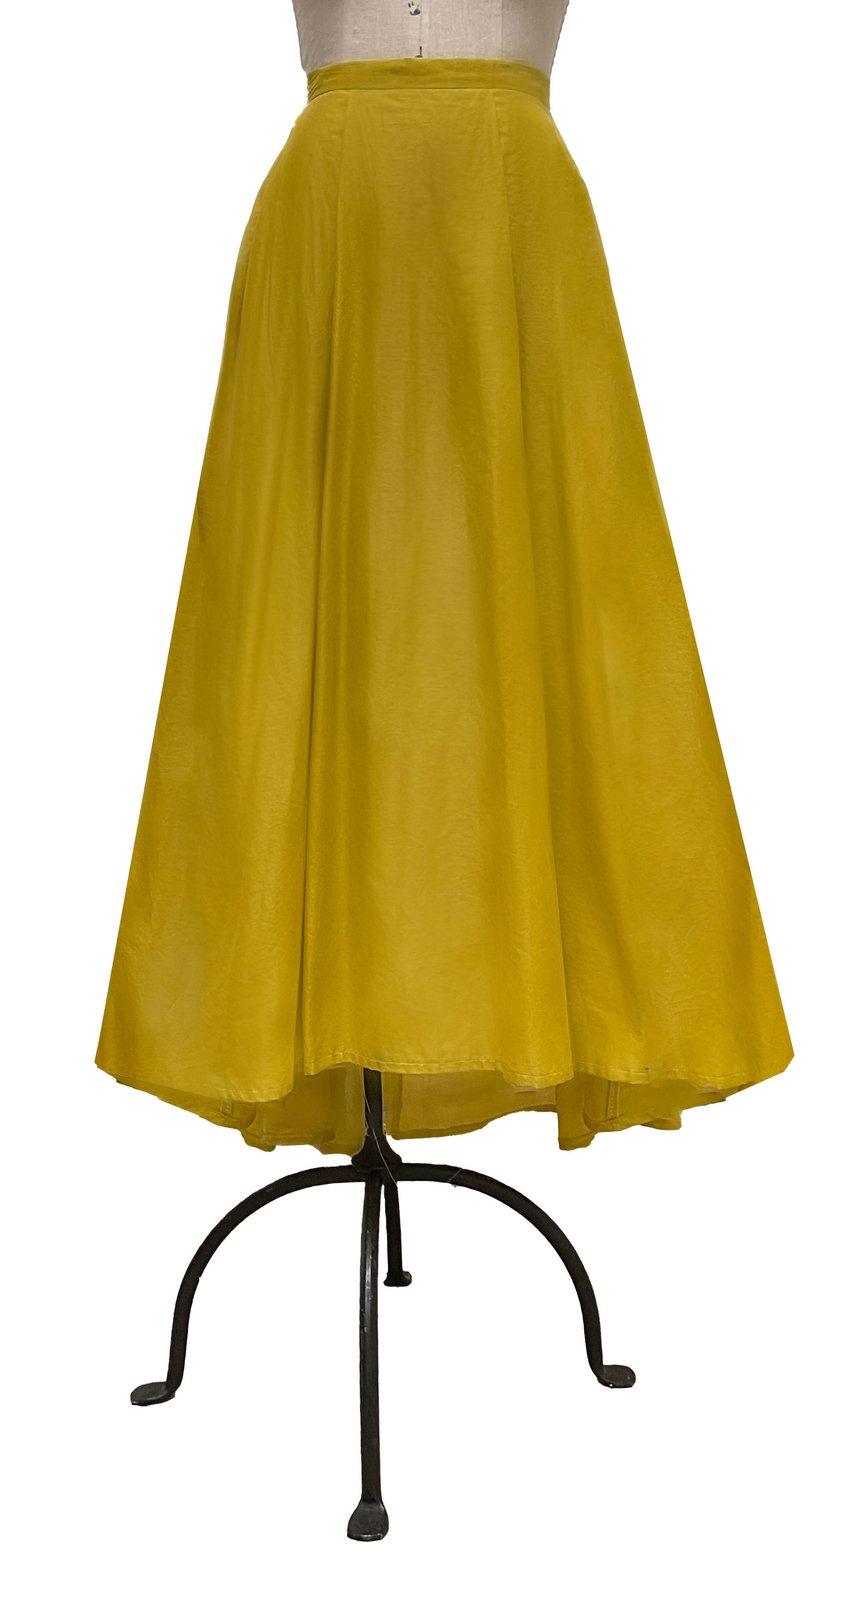 Orinoks Ankara Skirt, African High-low Skirt, African Print Skirt, Ankara High  Low, African Print, Yellow Skirt, African Fashion - Etsy